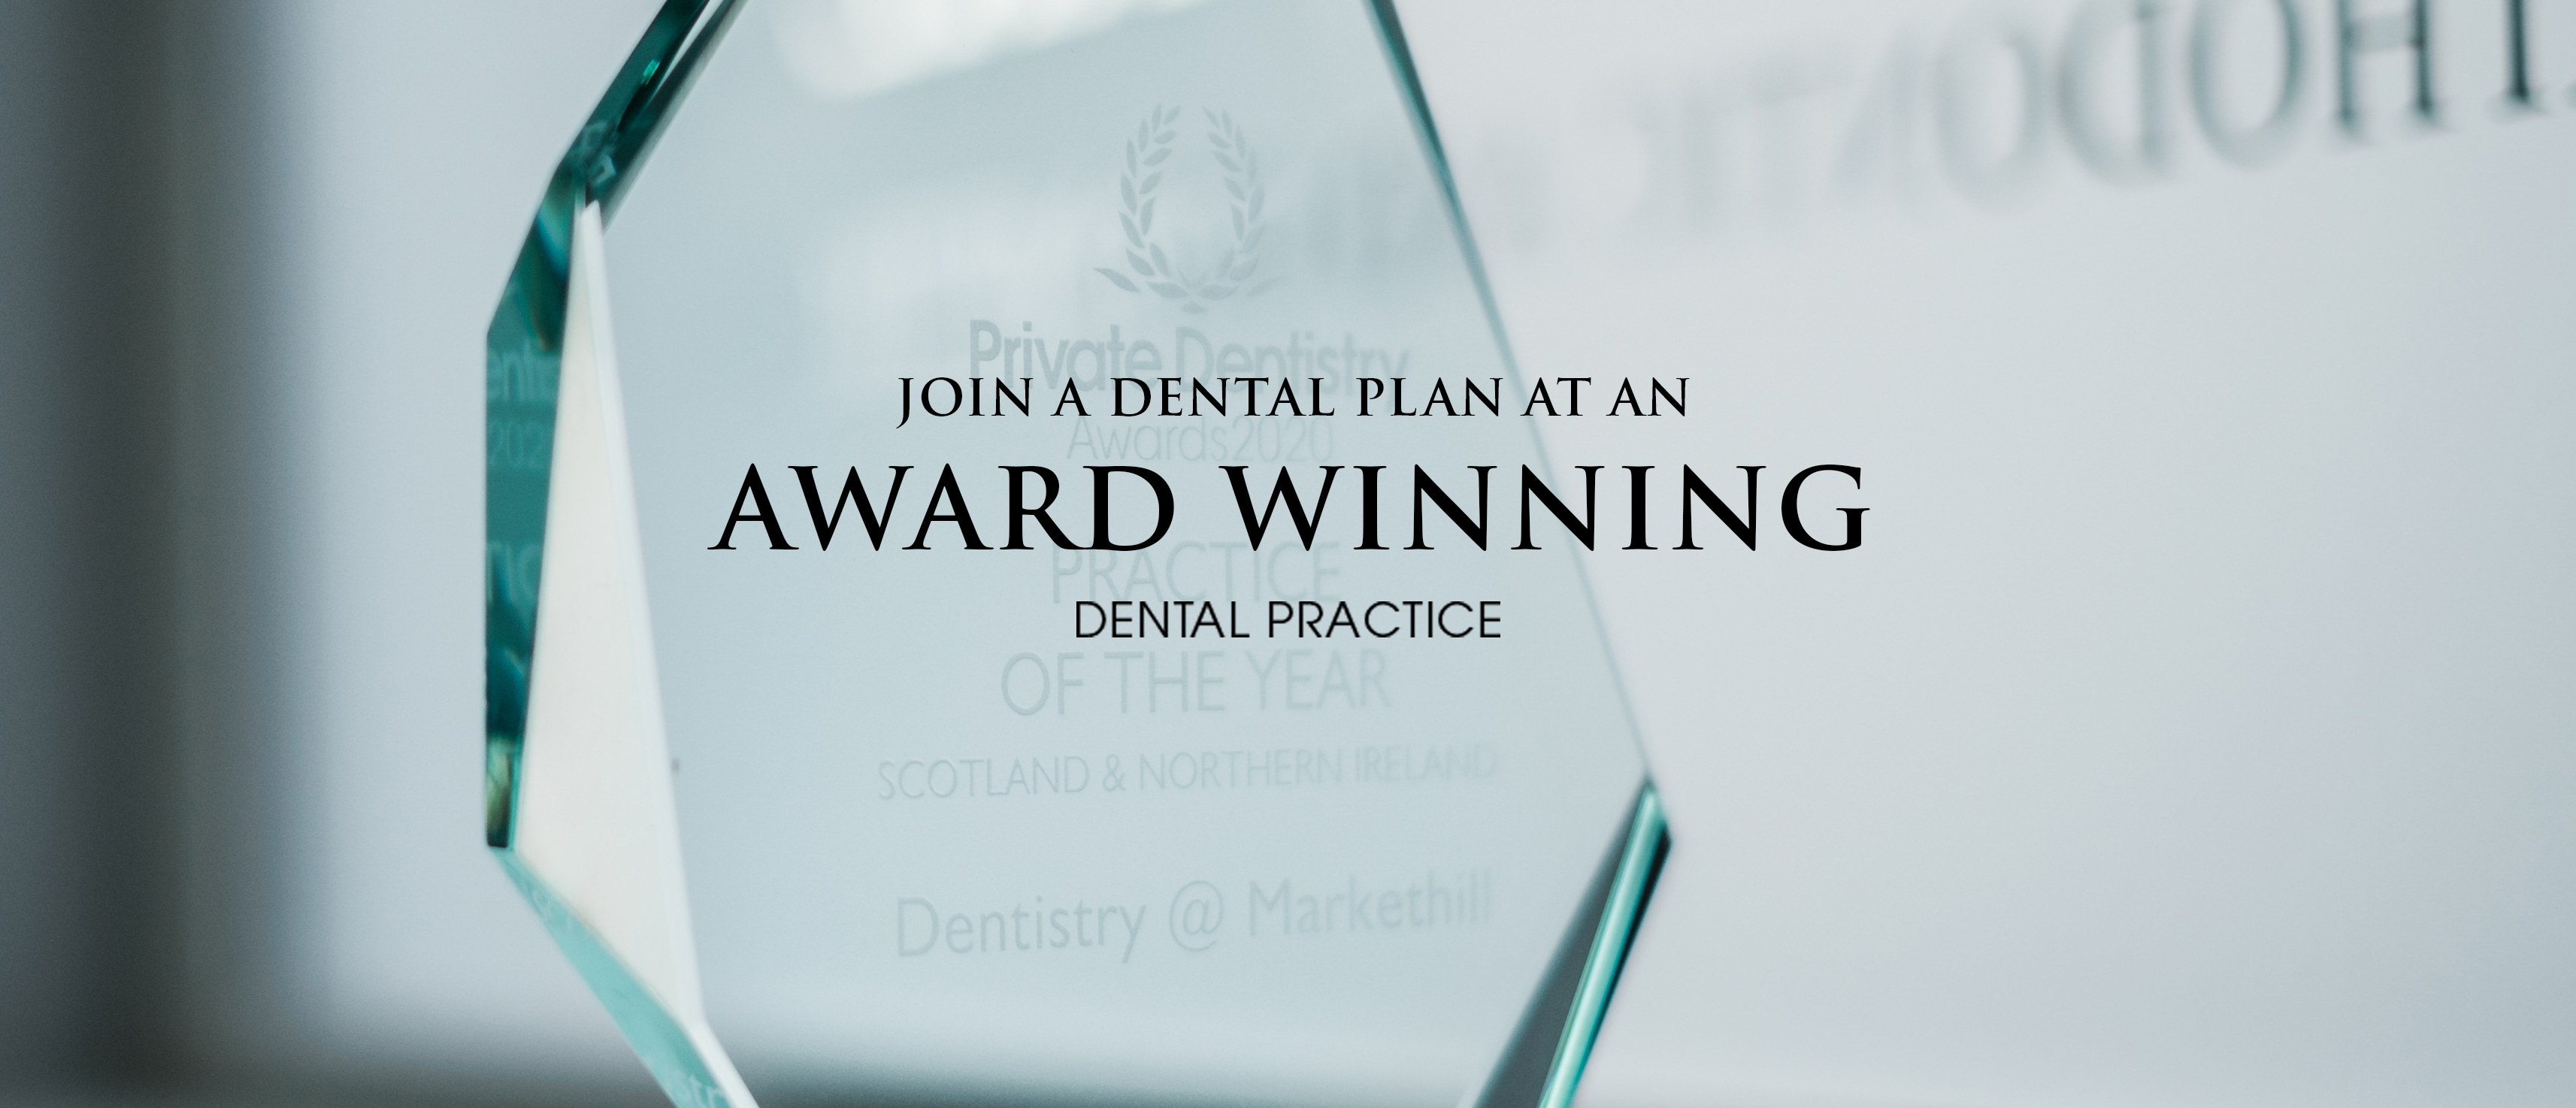 Building a good foundation of Dental health with our hygiene team. 